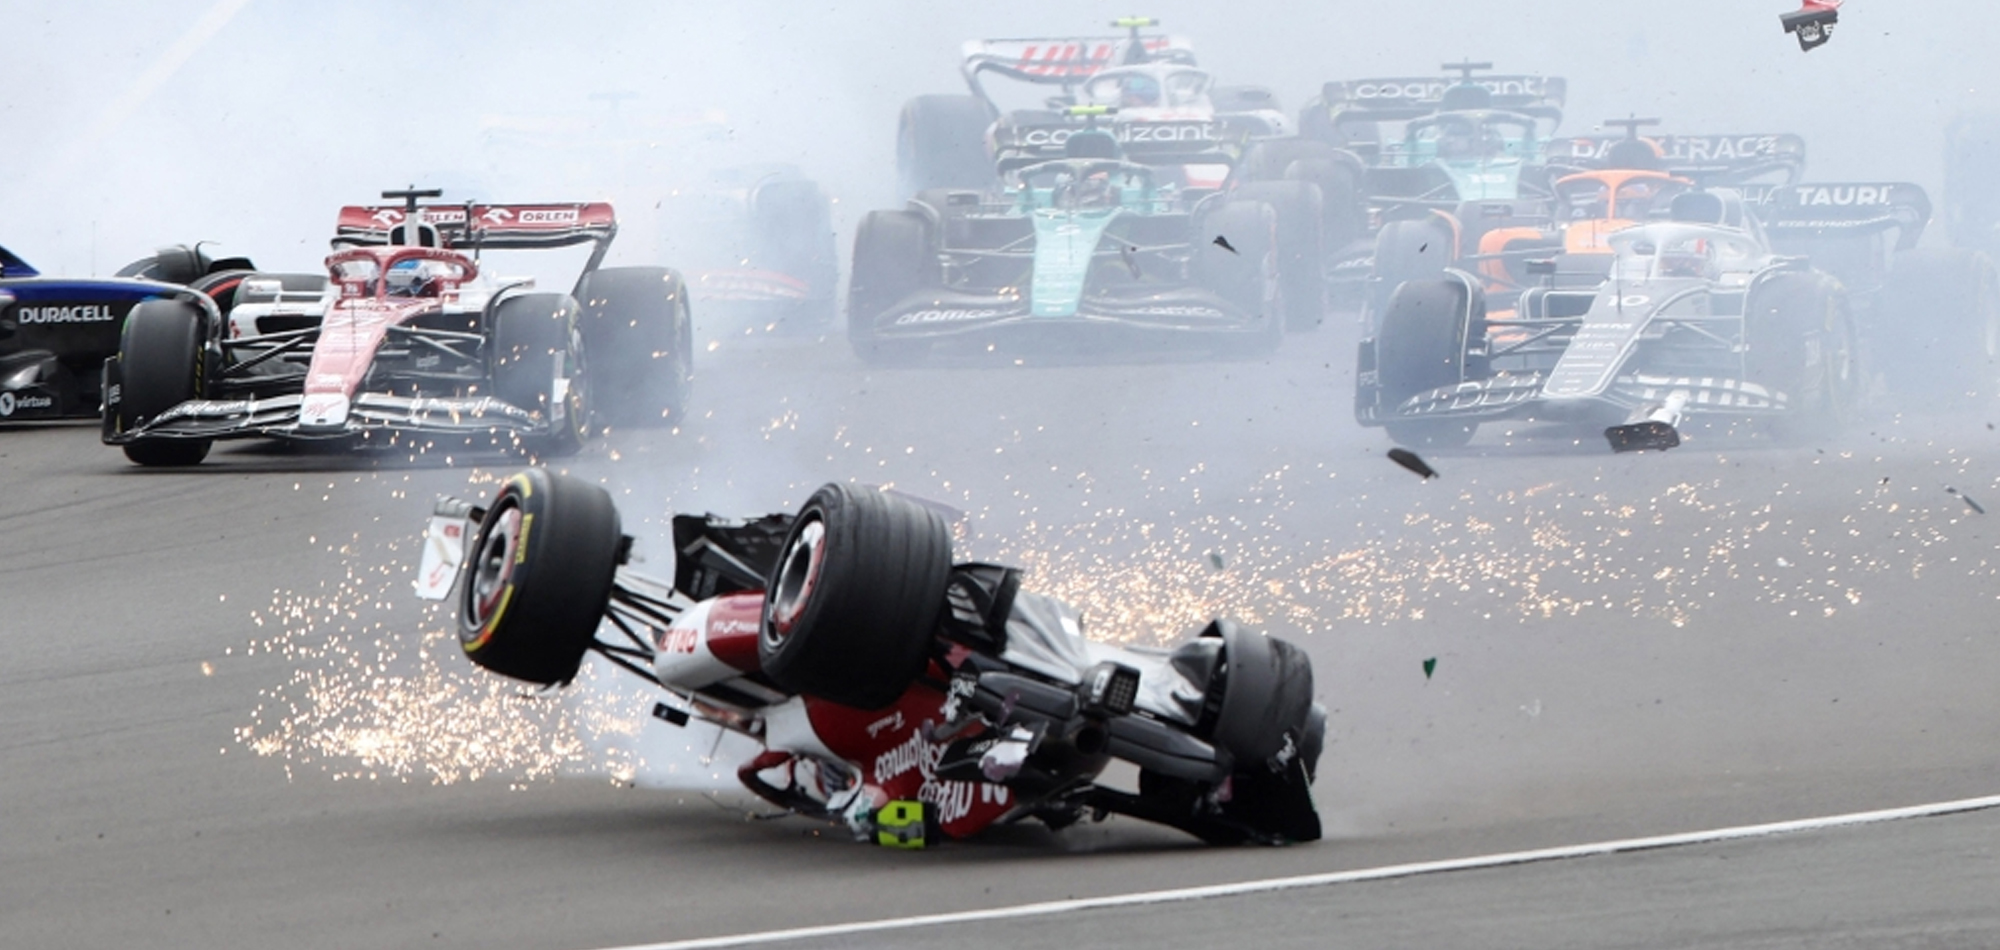 Zhou involved in frightening 1st-lap crash at British GP